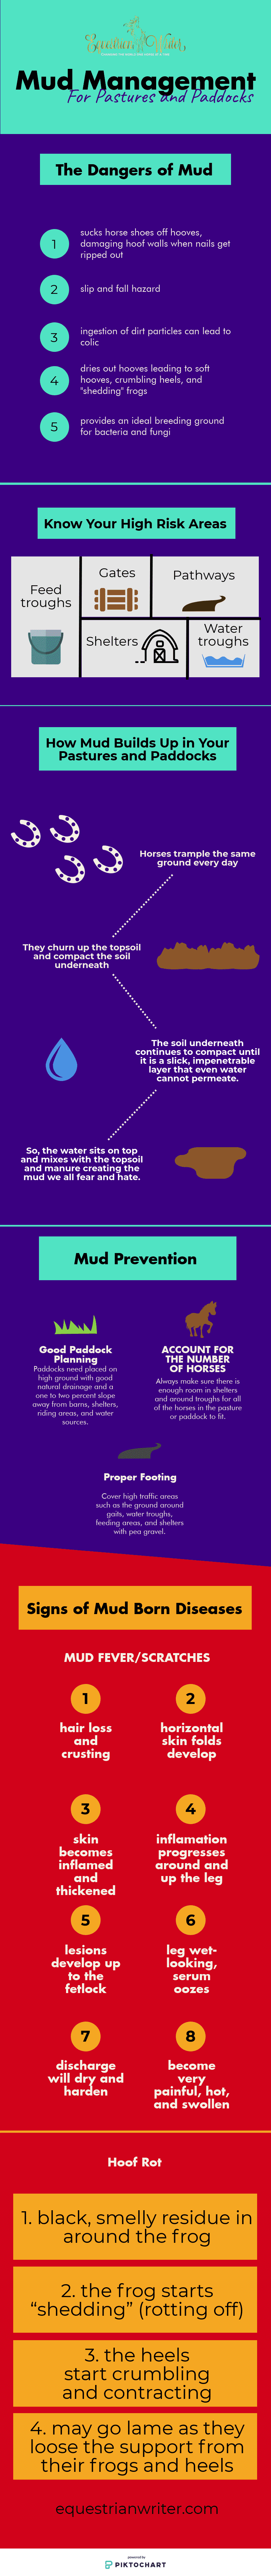 Mud management pinterest infographic